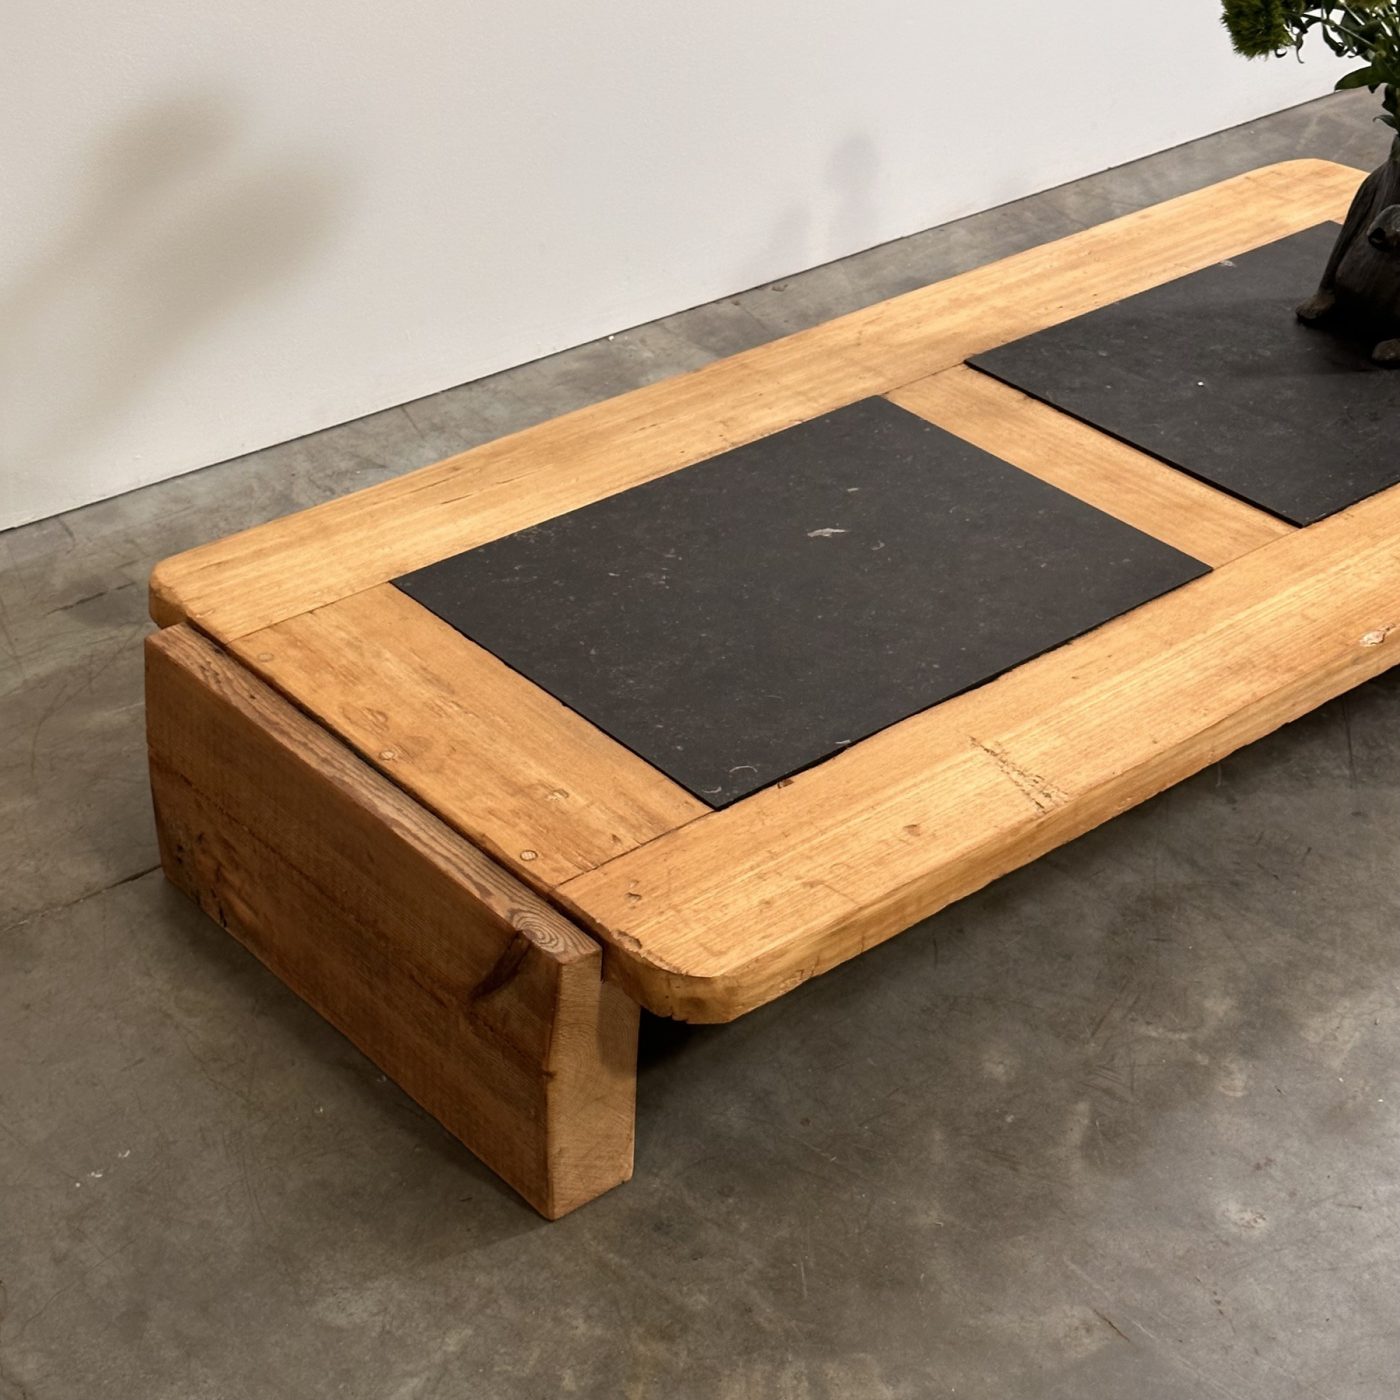 objet-vagabond-primitive-stone-table0000